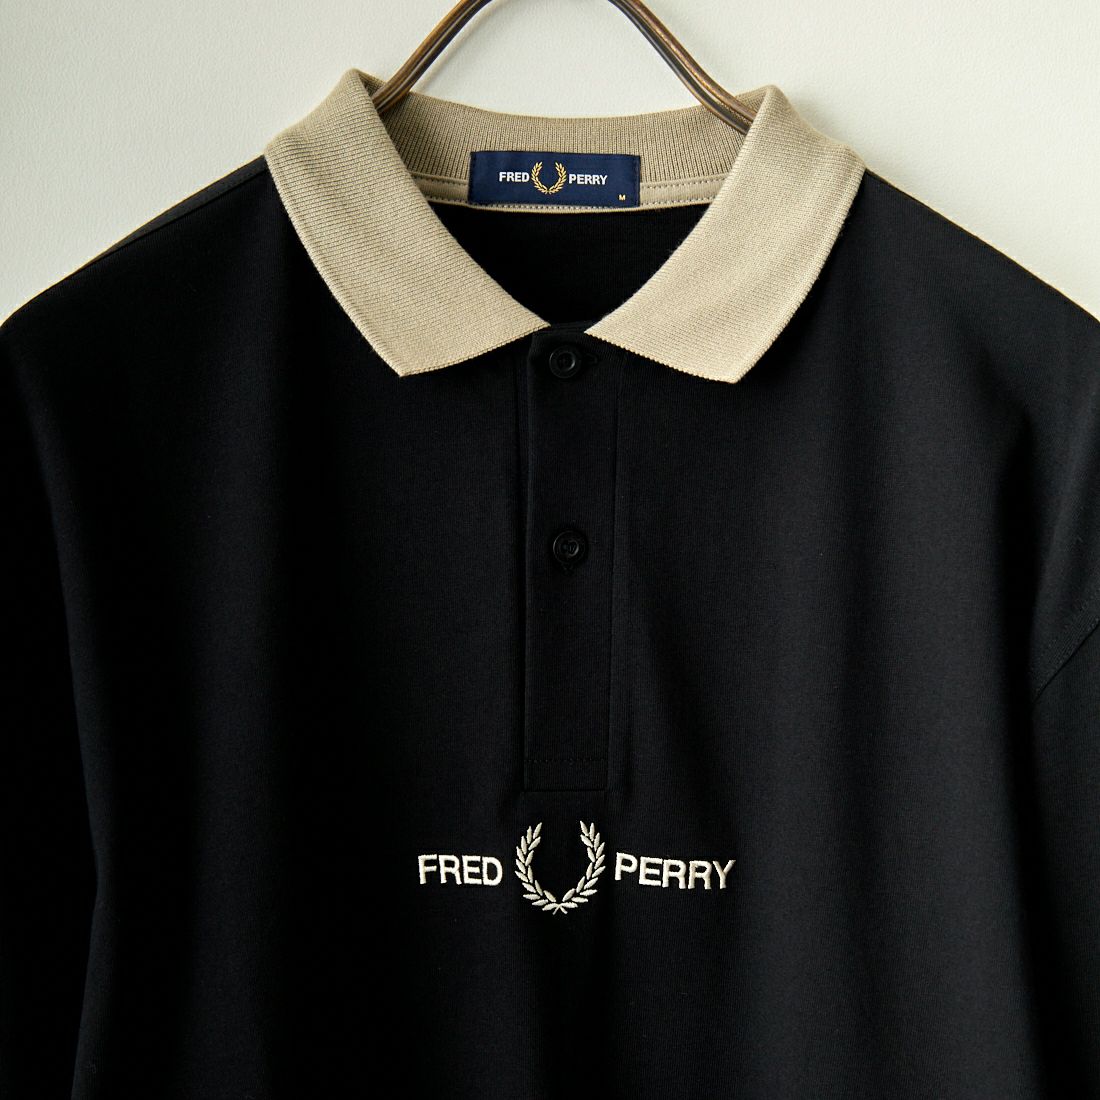 FRED PERRY [フレッドペリー] ポロシャツ [M7714] 102 BLACK